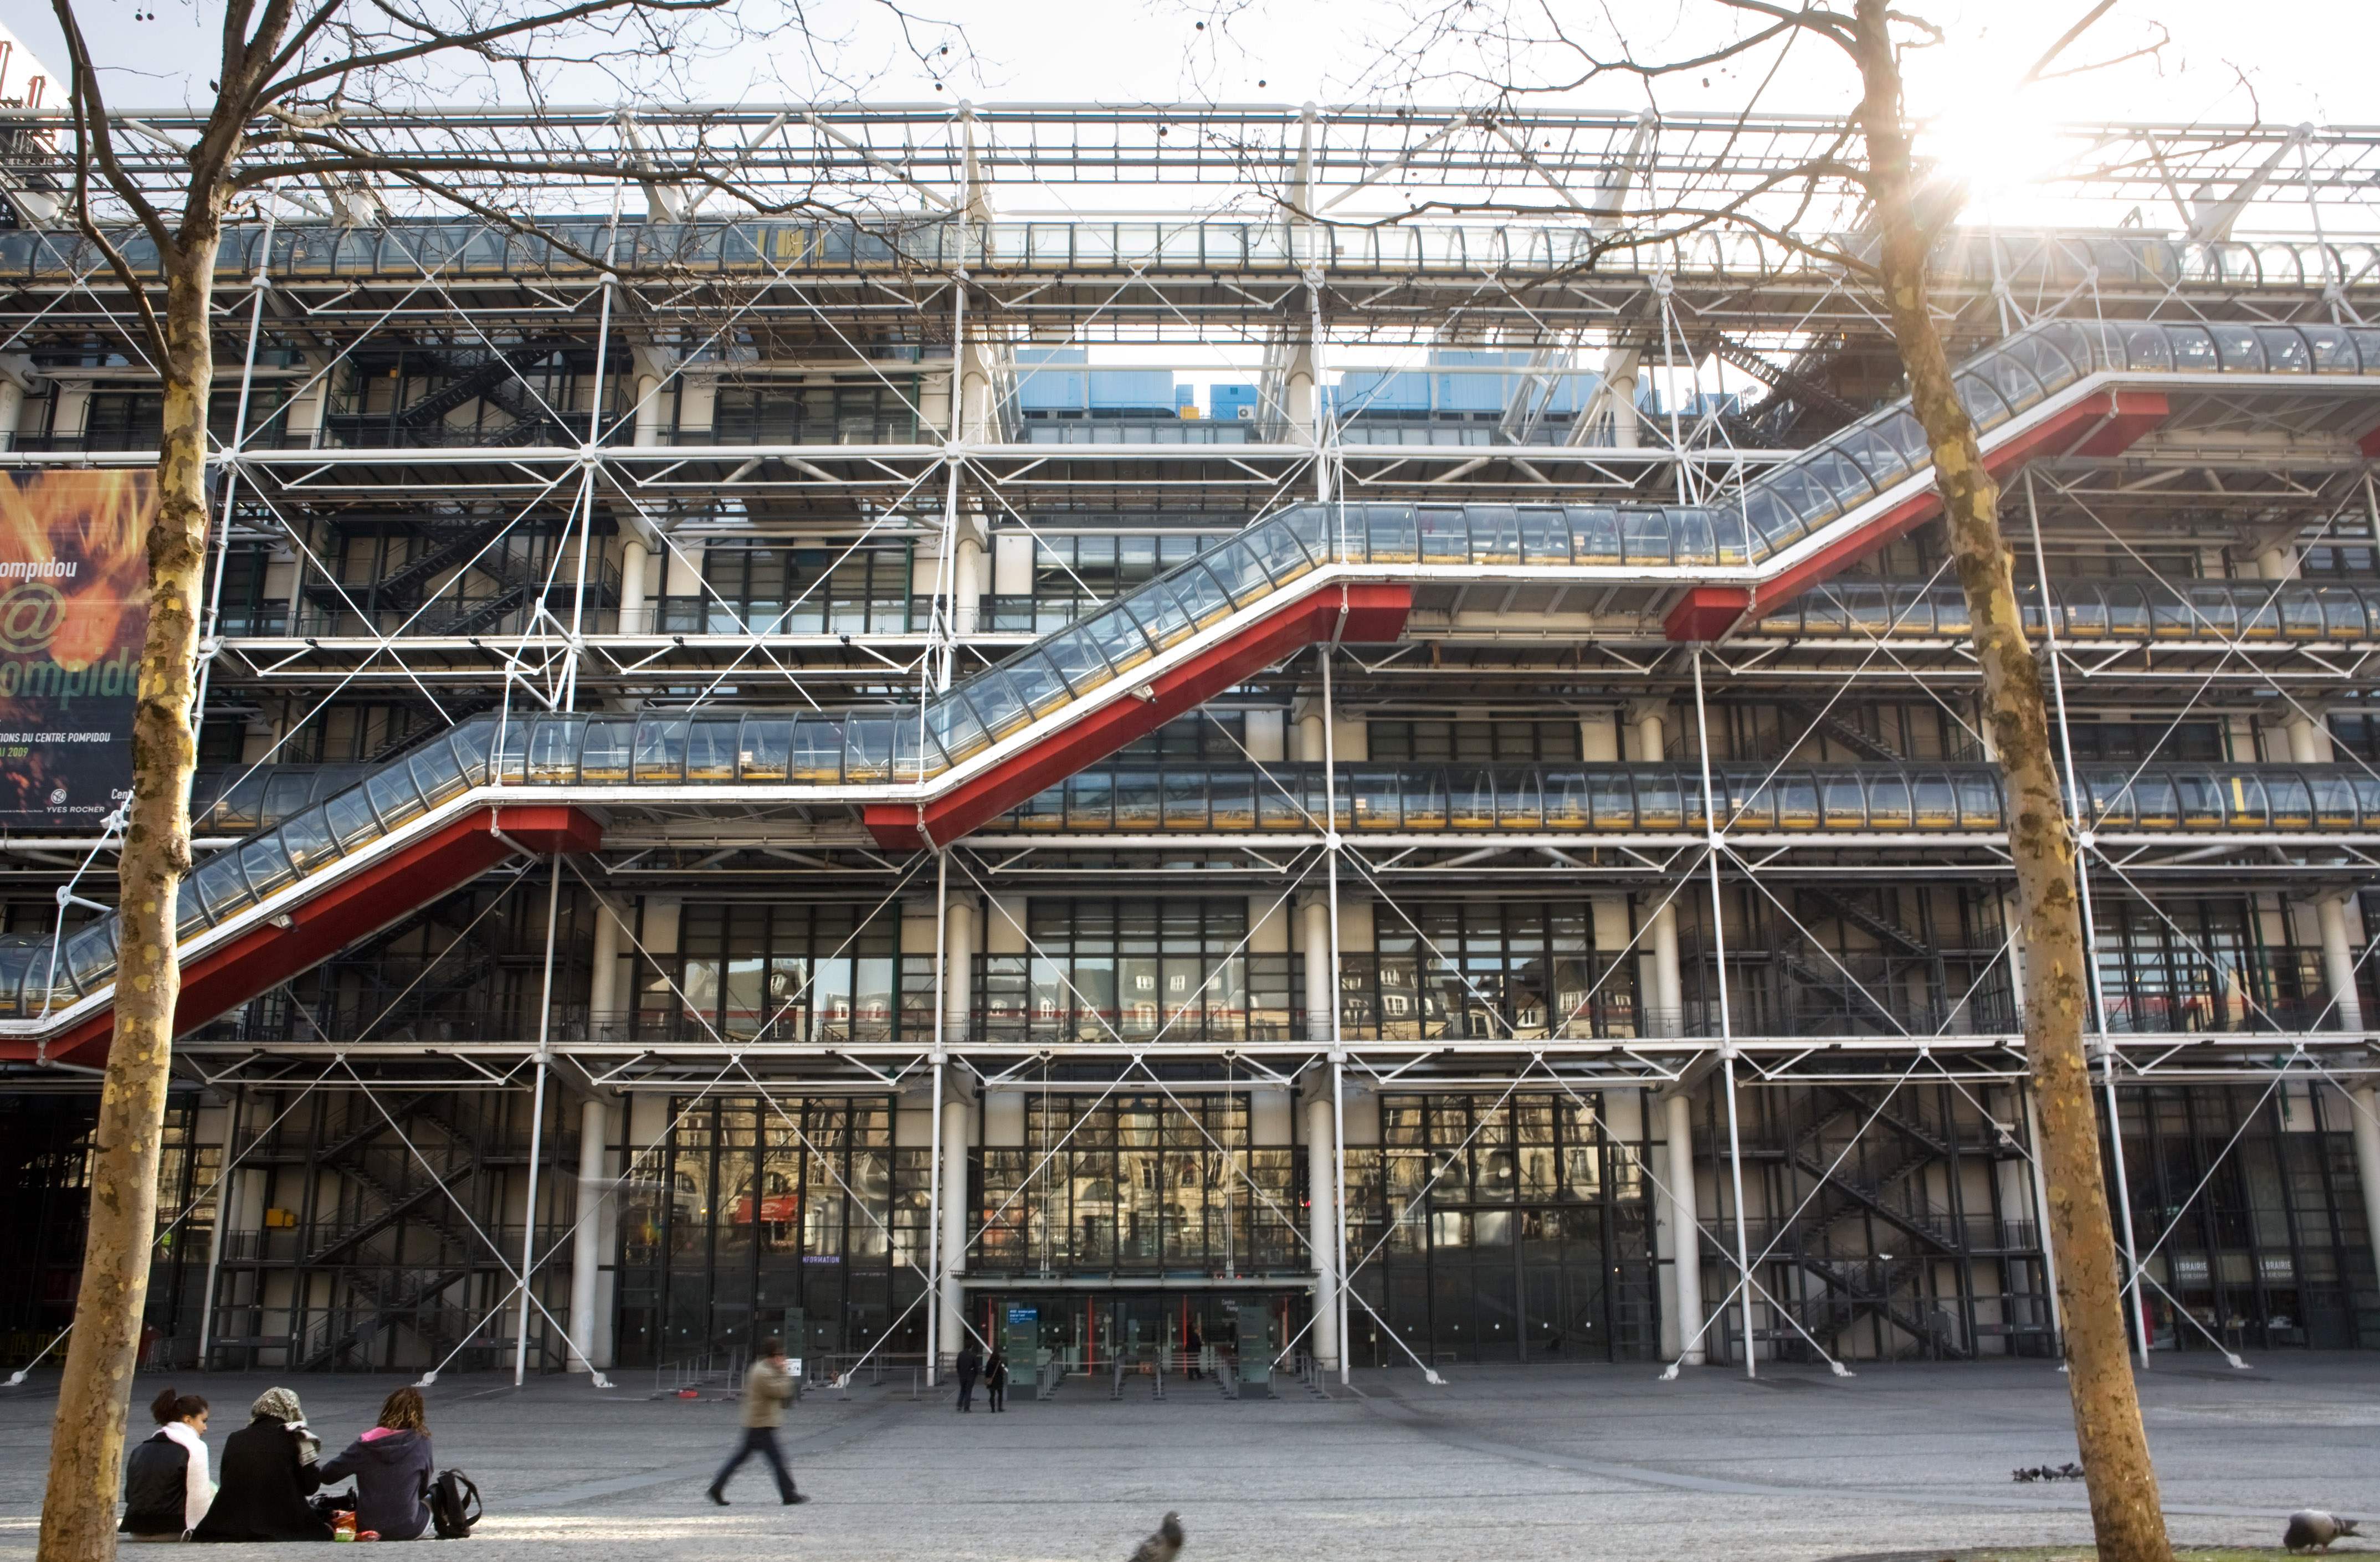 The facade of the Pompidou contemporary art centre in Paris